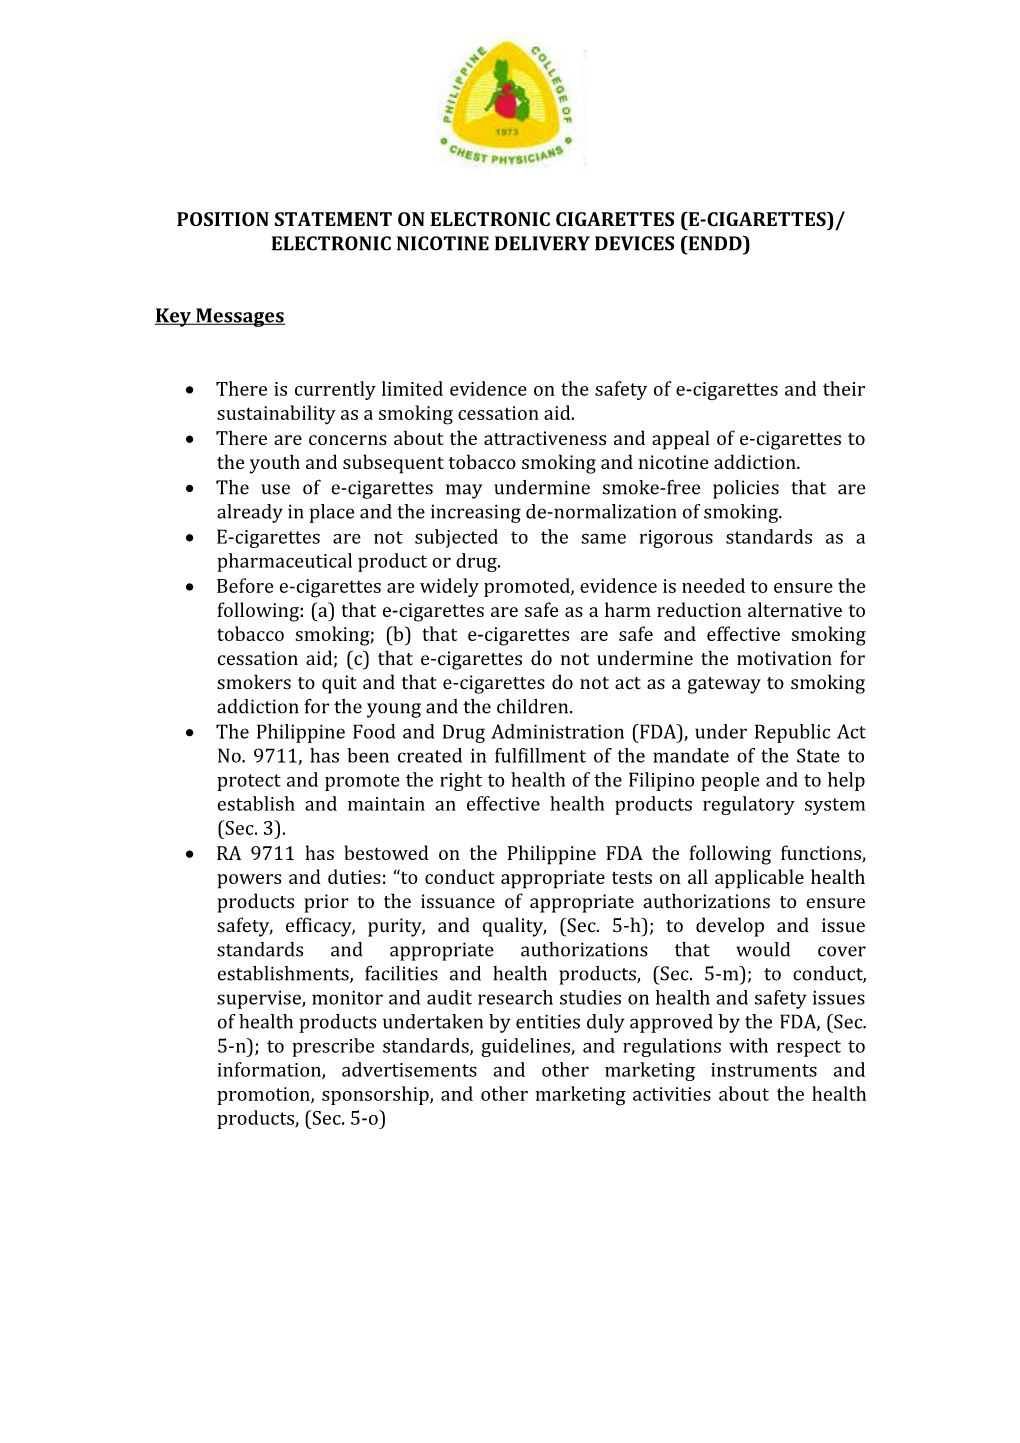 Position Statement on Electronic Cigarettes (E-Cigarettes)